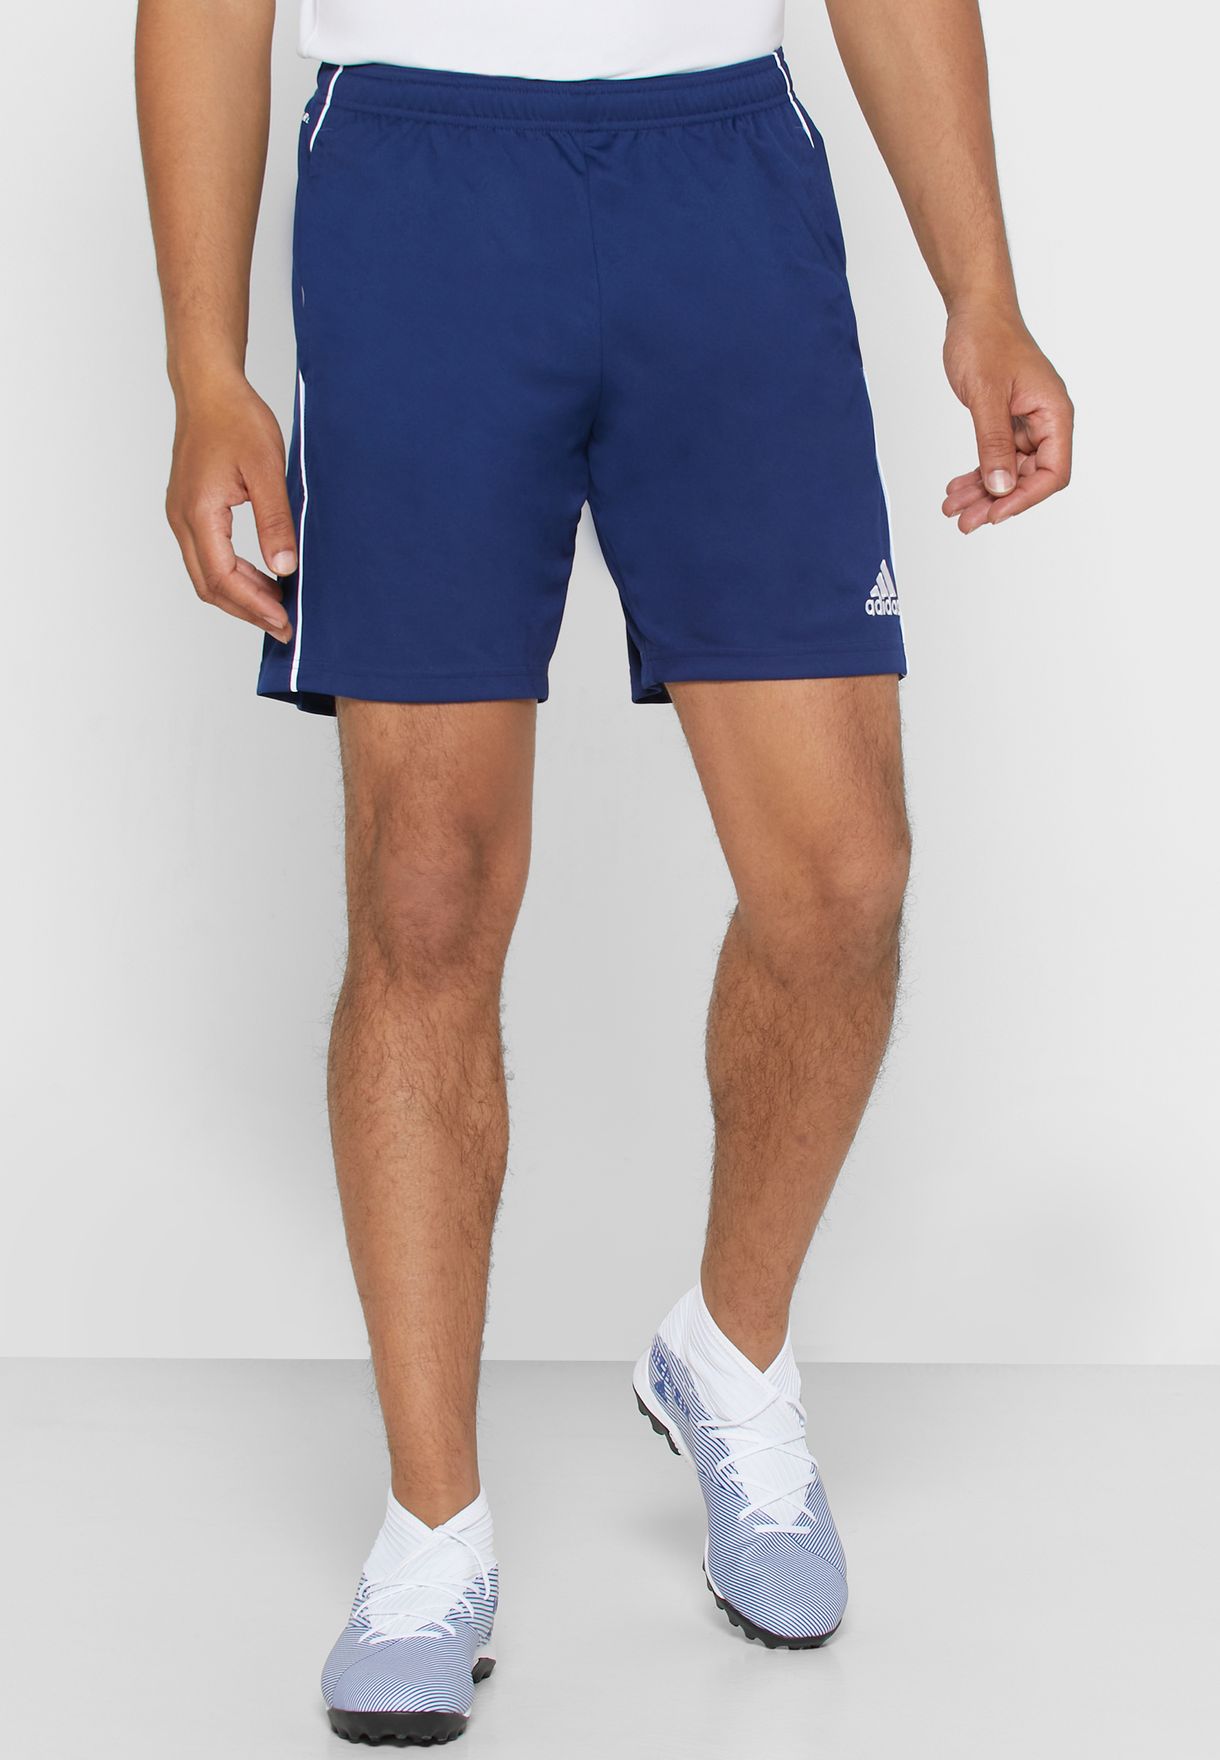 adidas core shorts